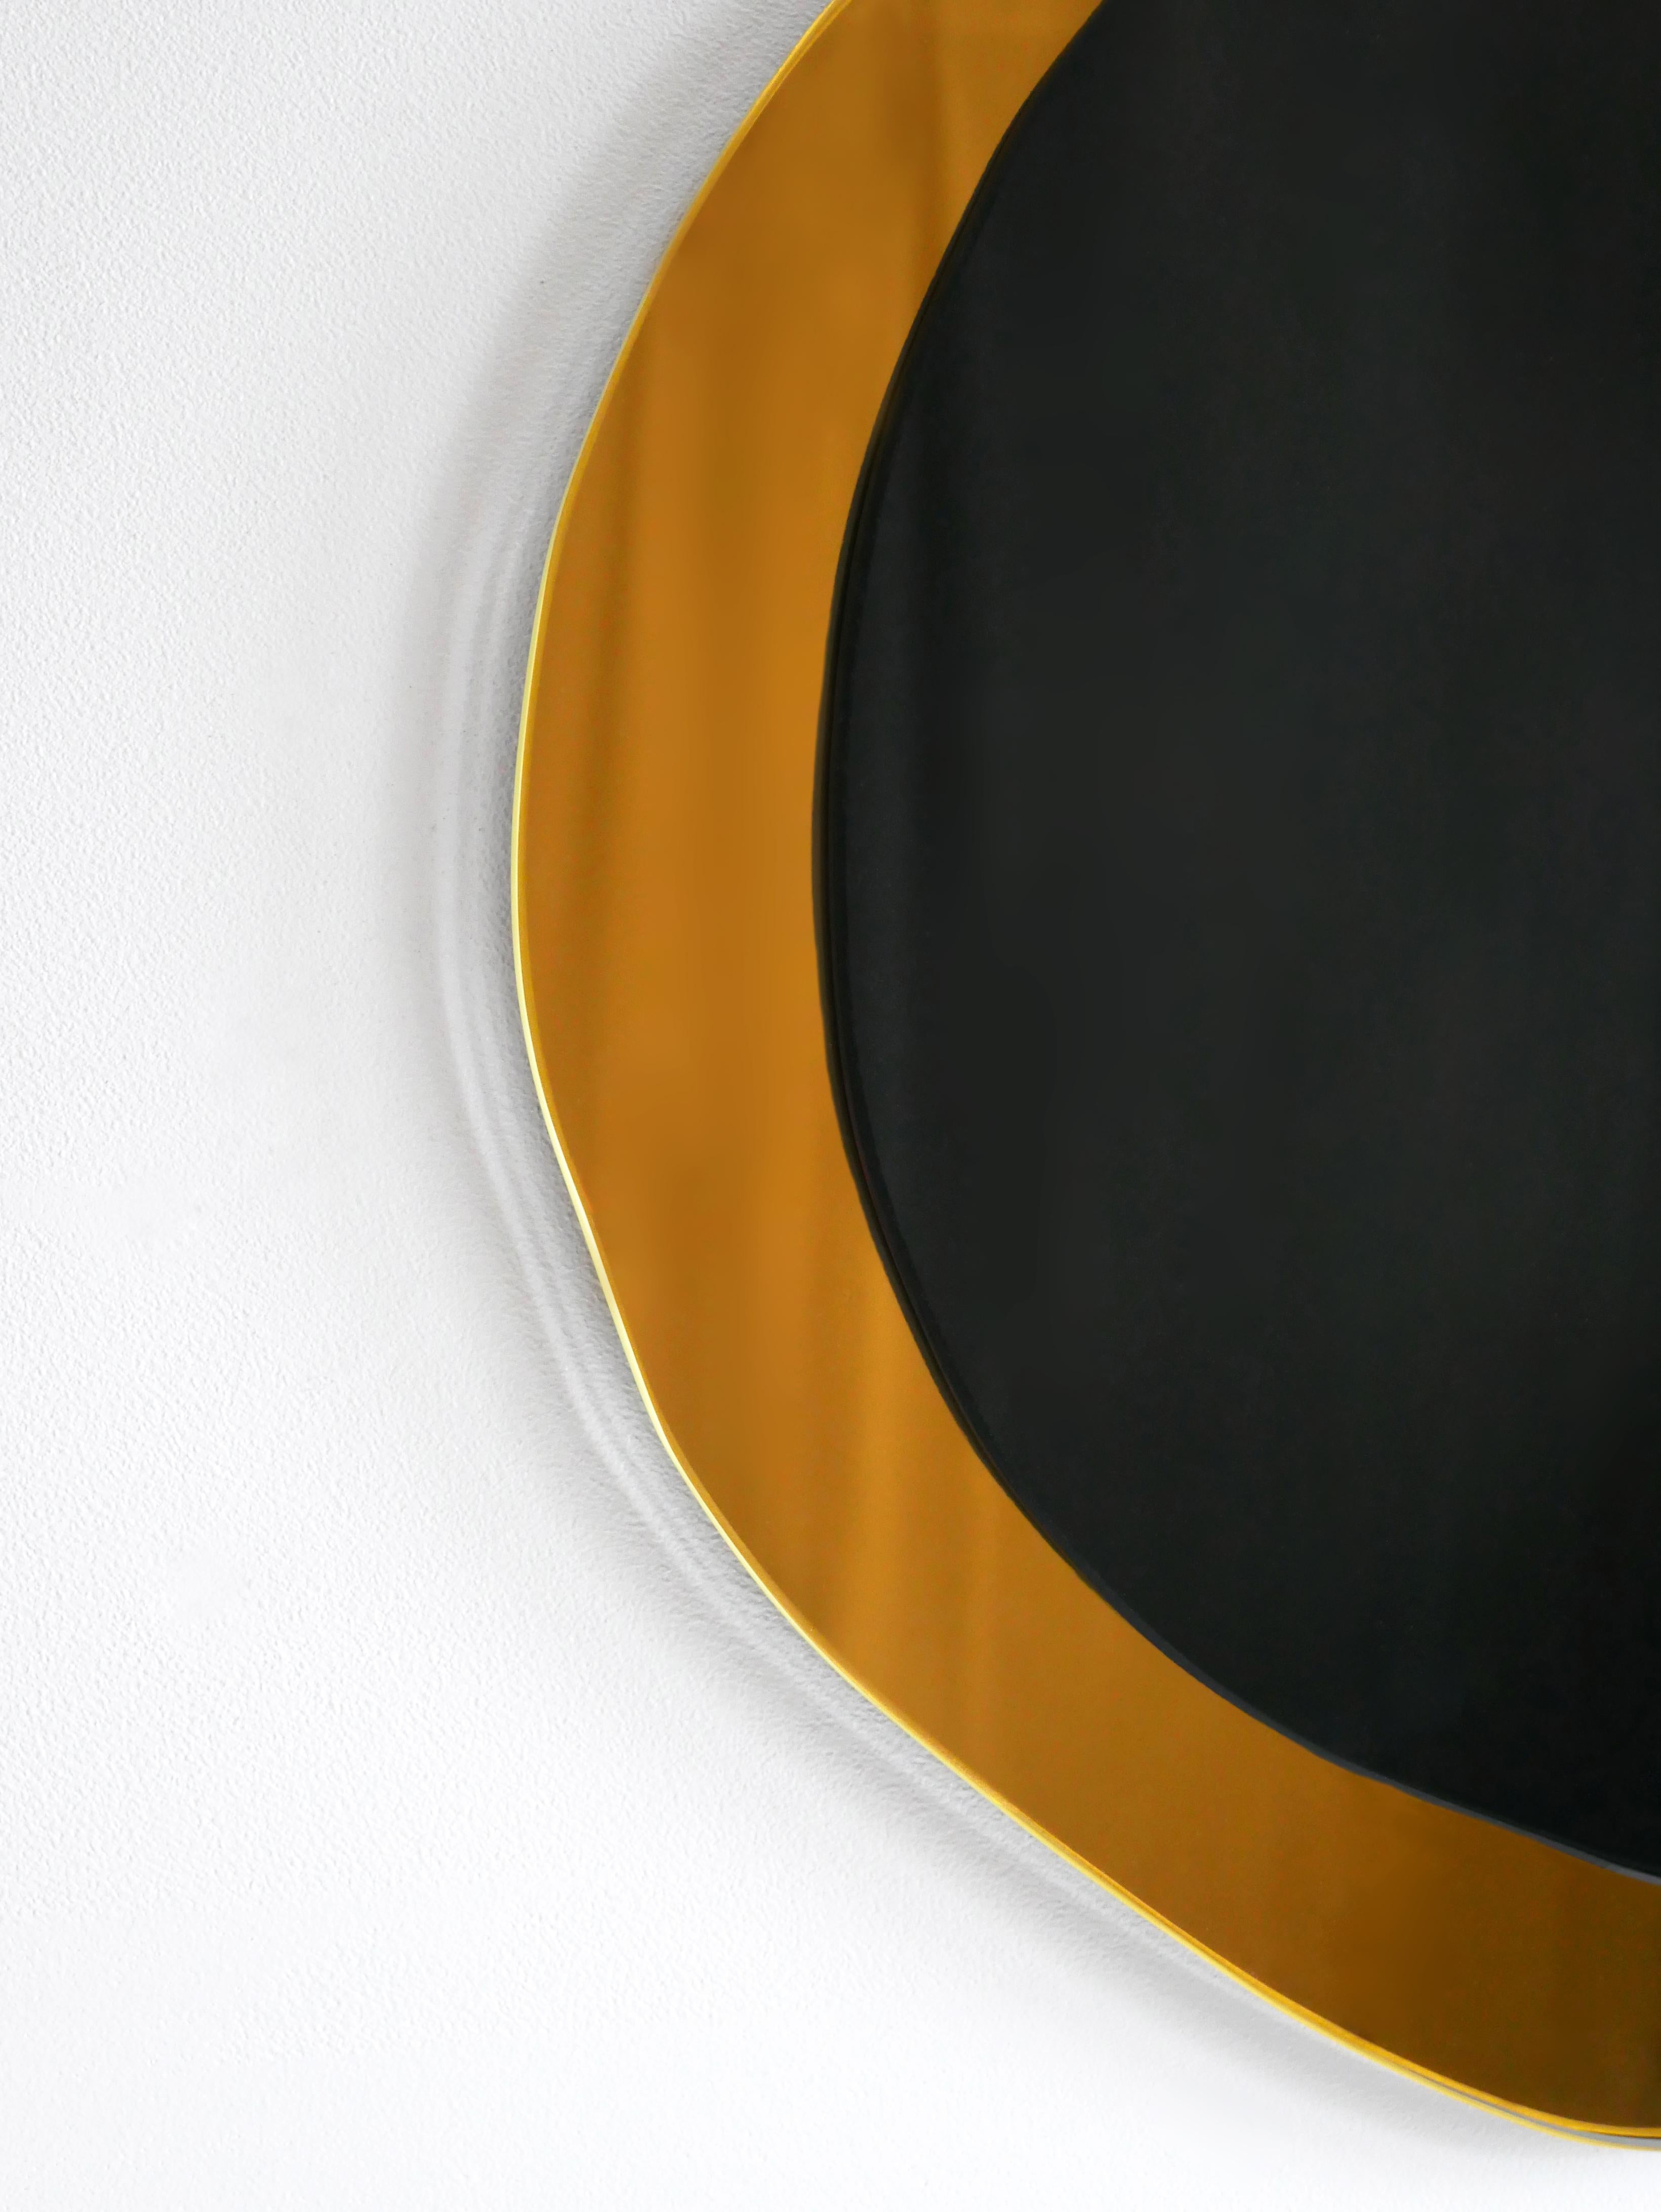 Dark Eclipse medium hand-sculpted mirror, Laurene Guarneri
Limited edition.
Handmade.
Materials: Gold colored mirror, dark colored mirror.
Dimensions: 80 x 80 cm

Laurène Guarneri is a designer based in Paris.
Graduated in master's degree